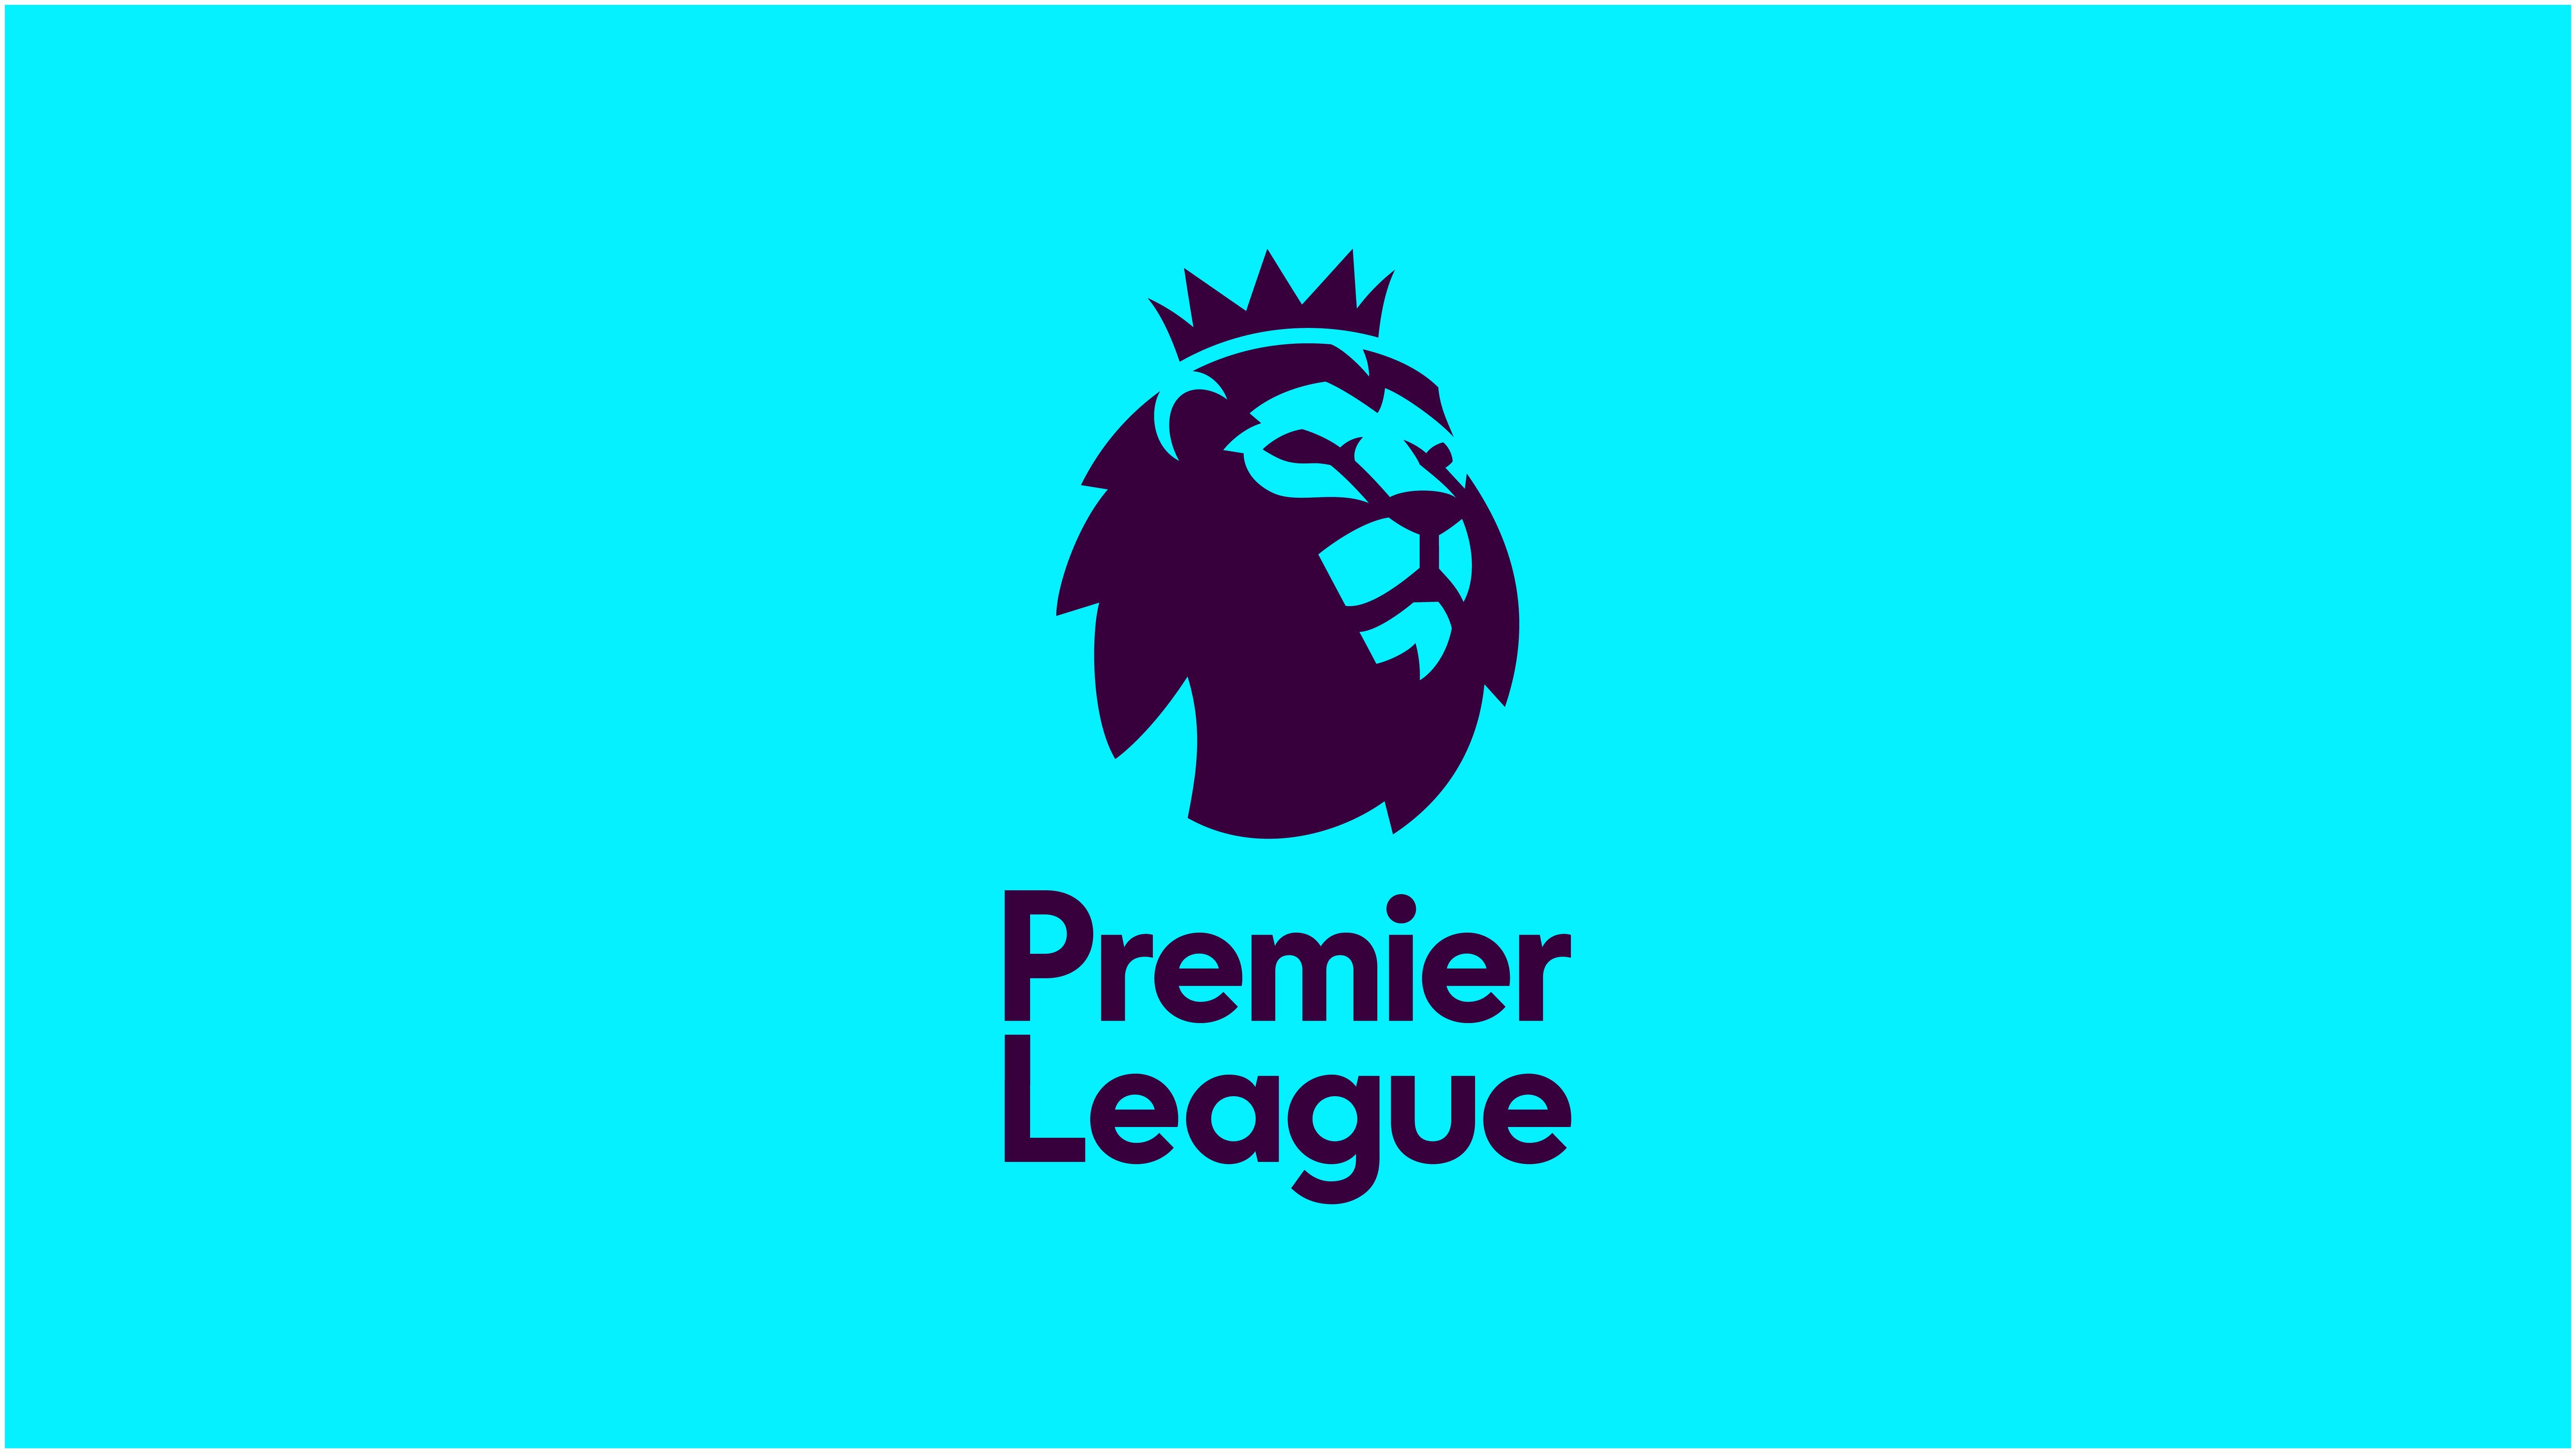 EPL Logo - Premier League | DesignStudio